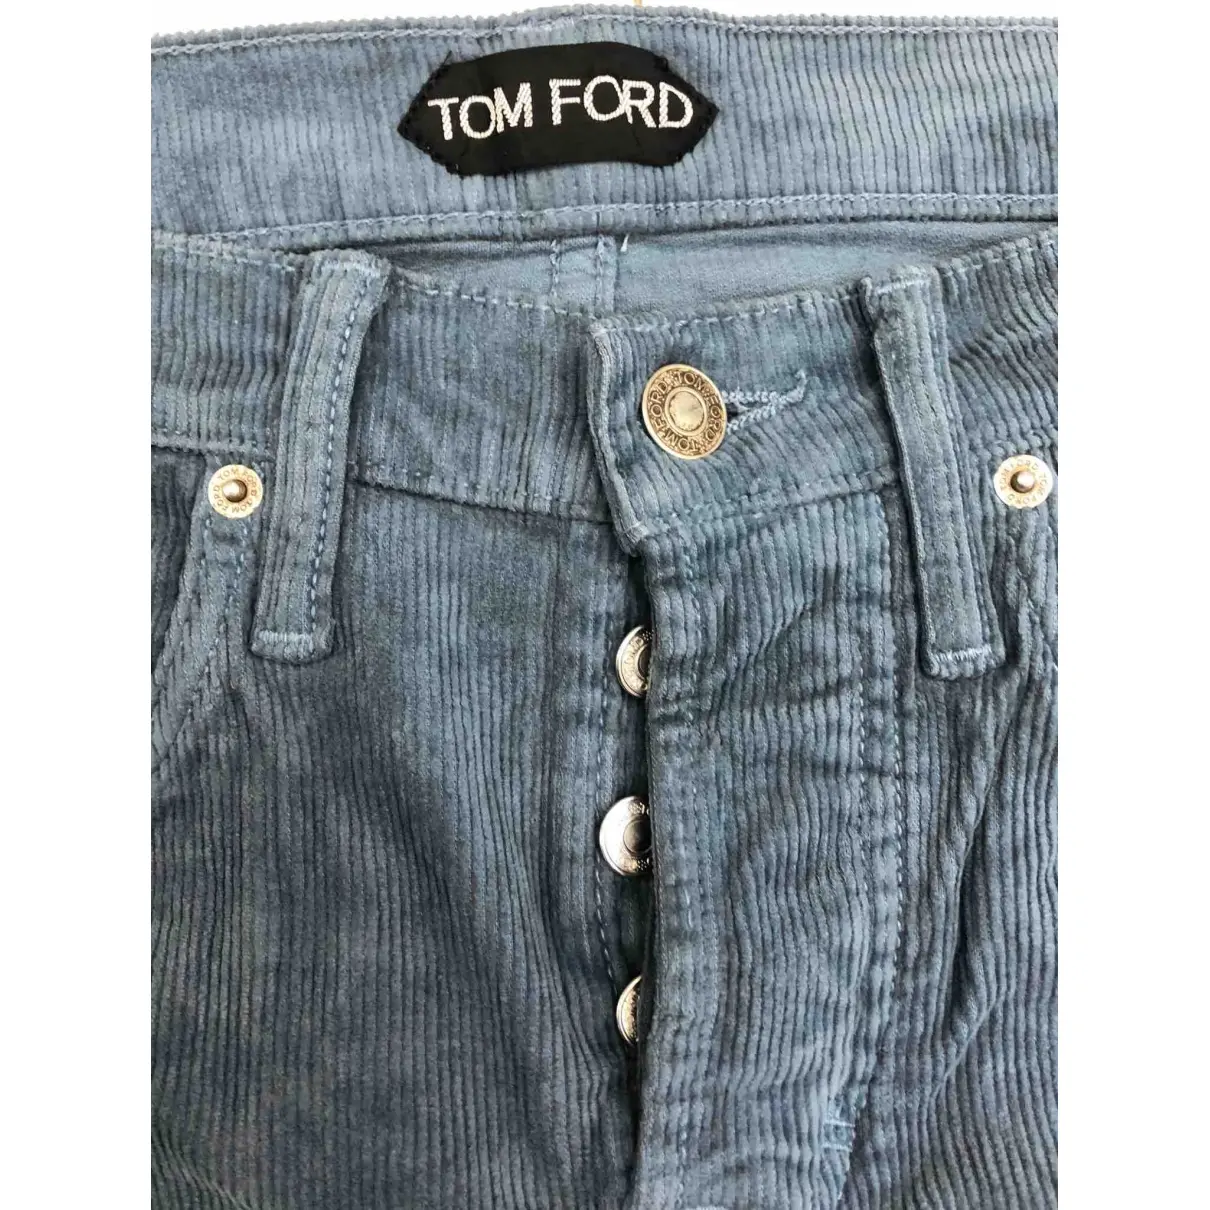 Buy Tom Ford Slim jean online